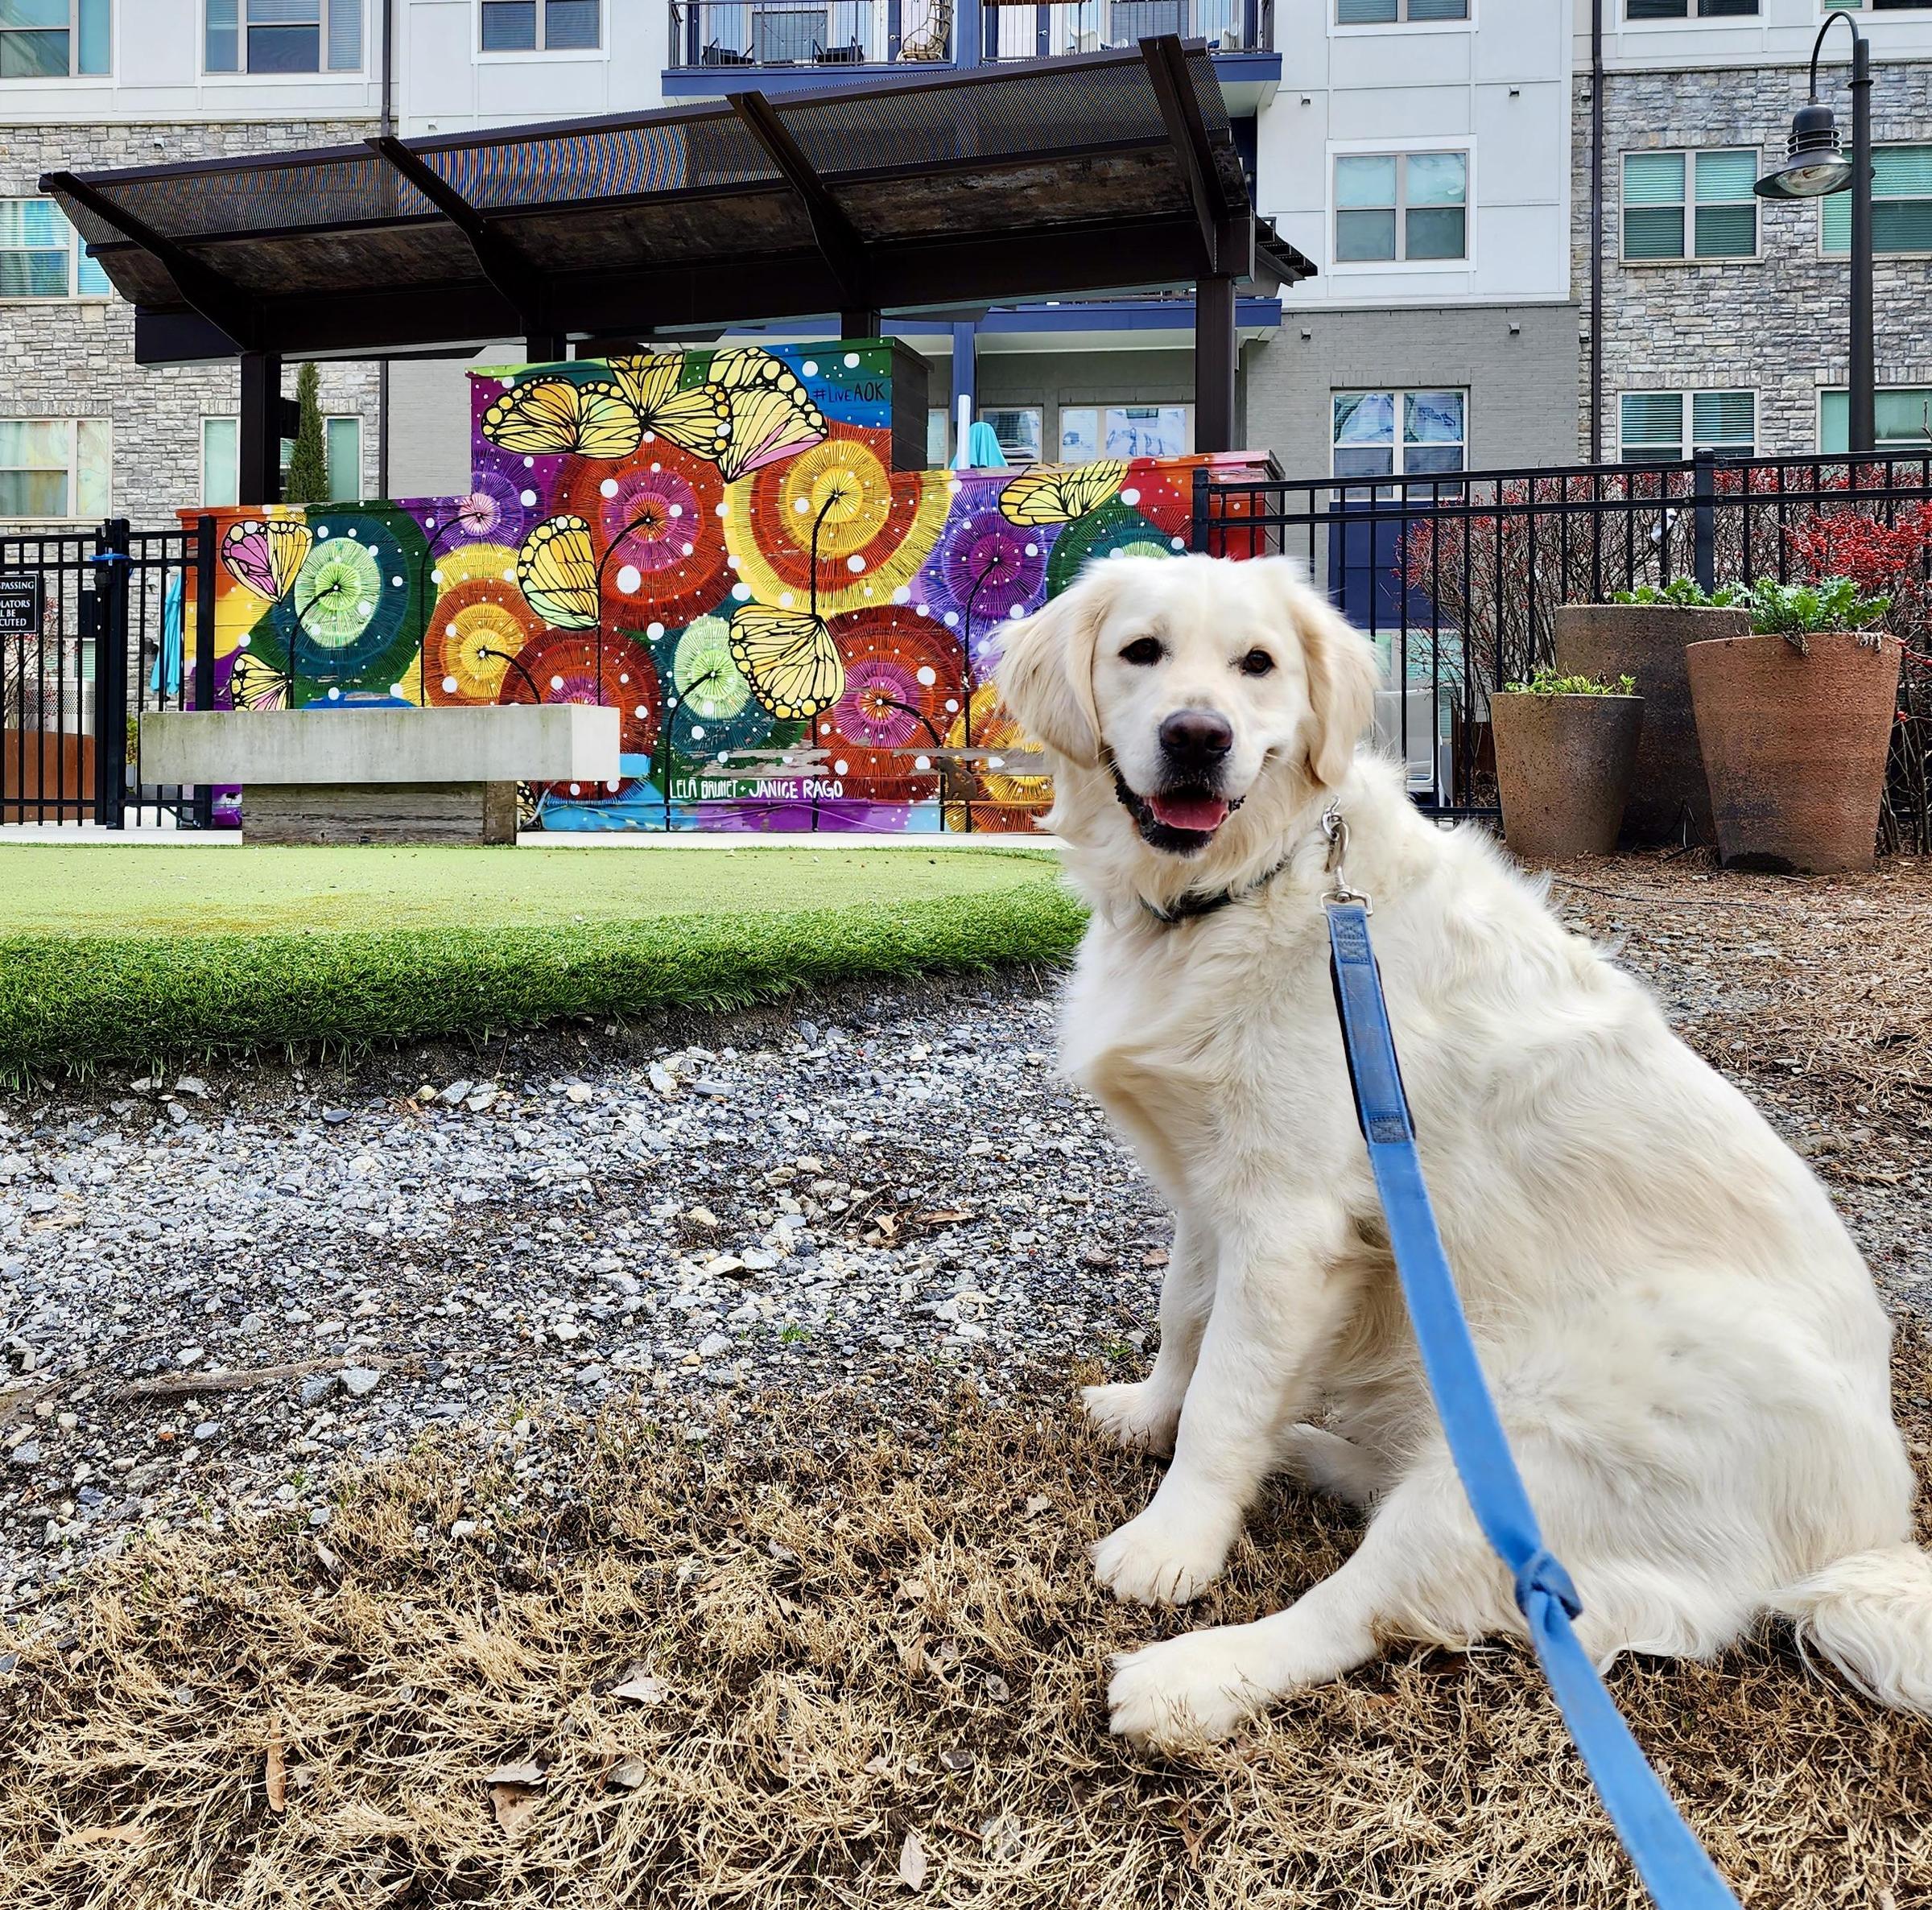 Pet Friendly Barks & Bites: Doggie Food Crawl on the Atlanta BeltLine